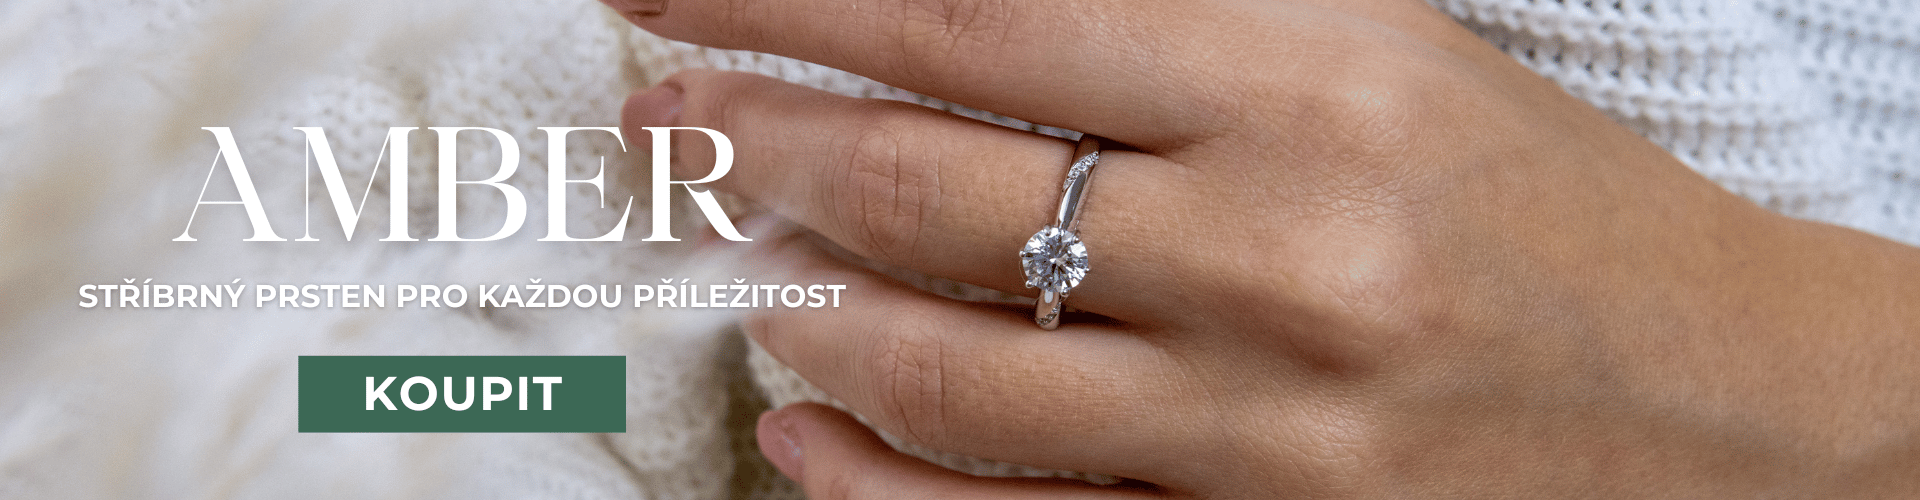 Amber stříbrný prsten